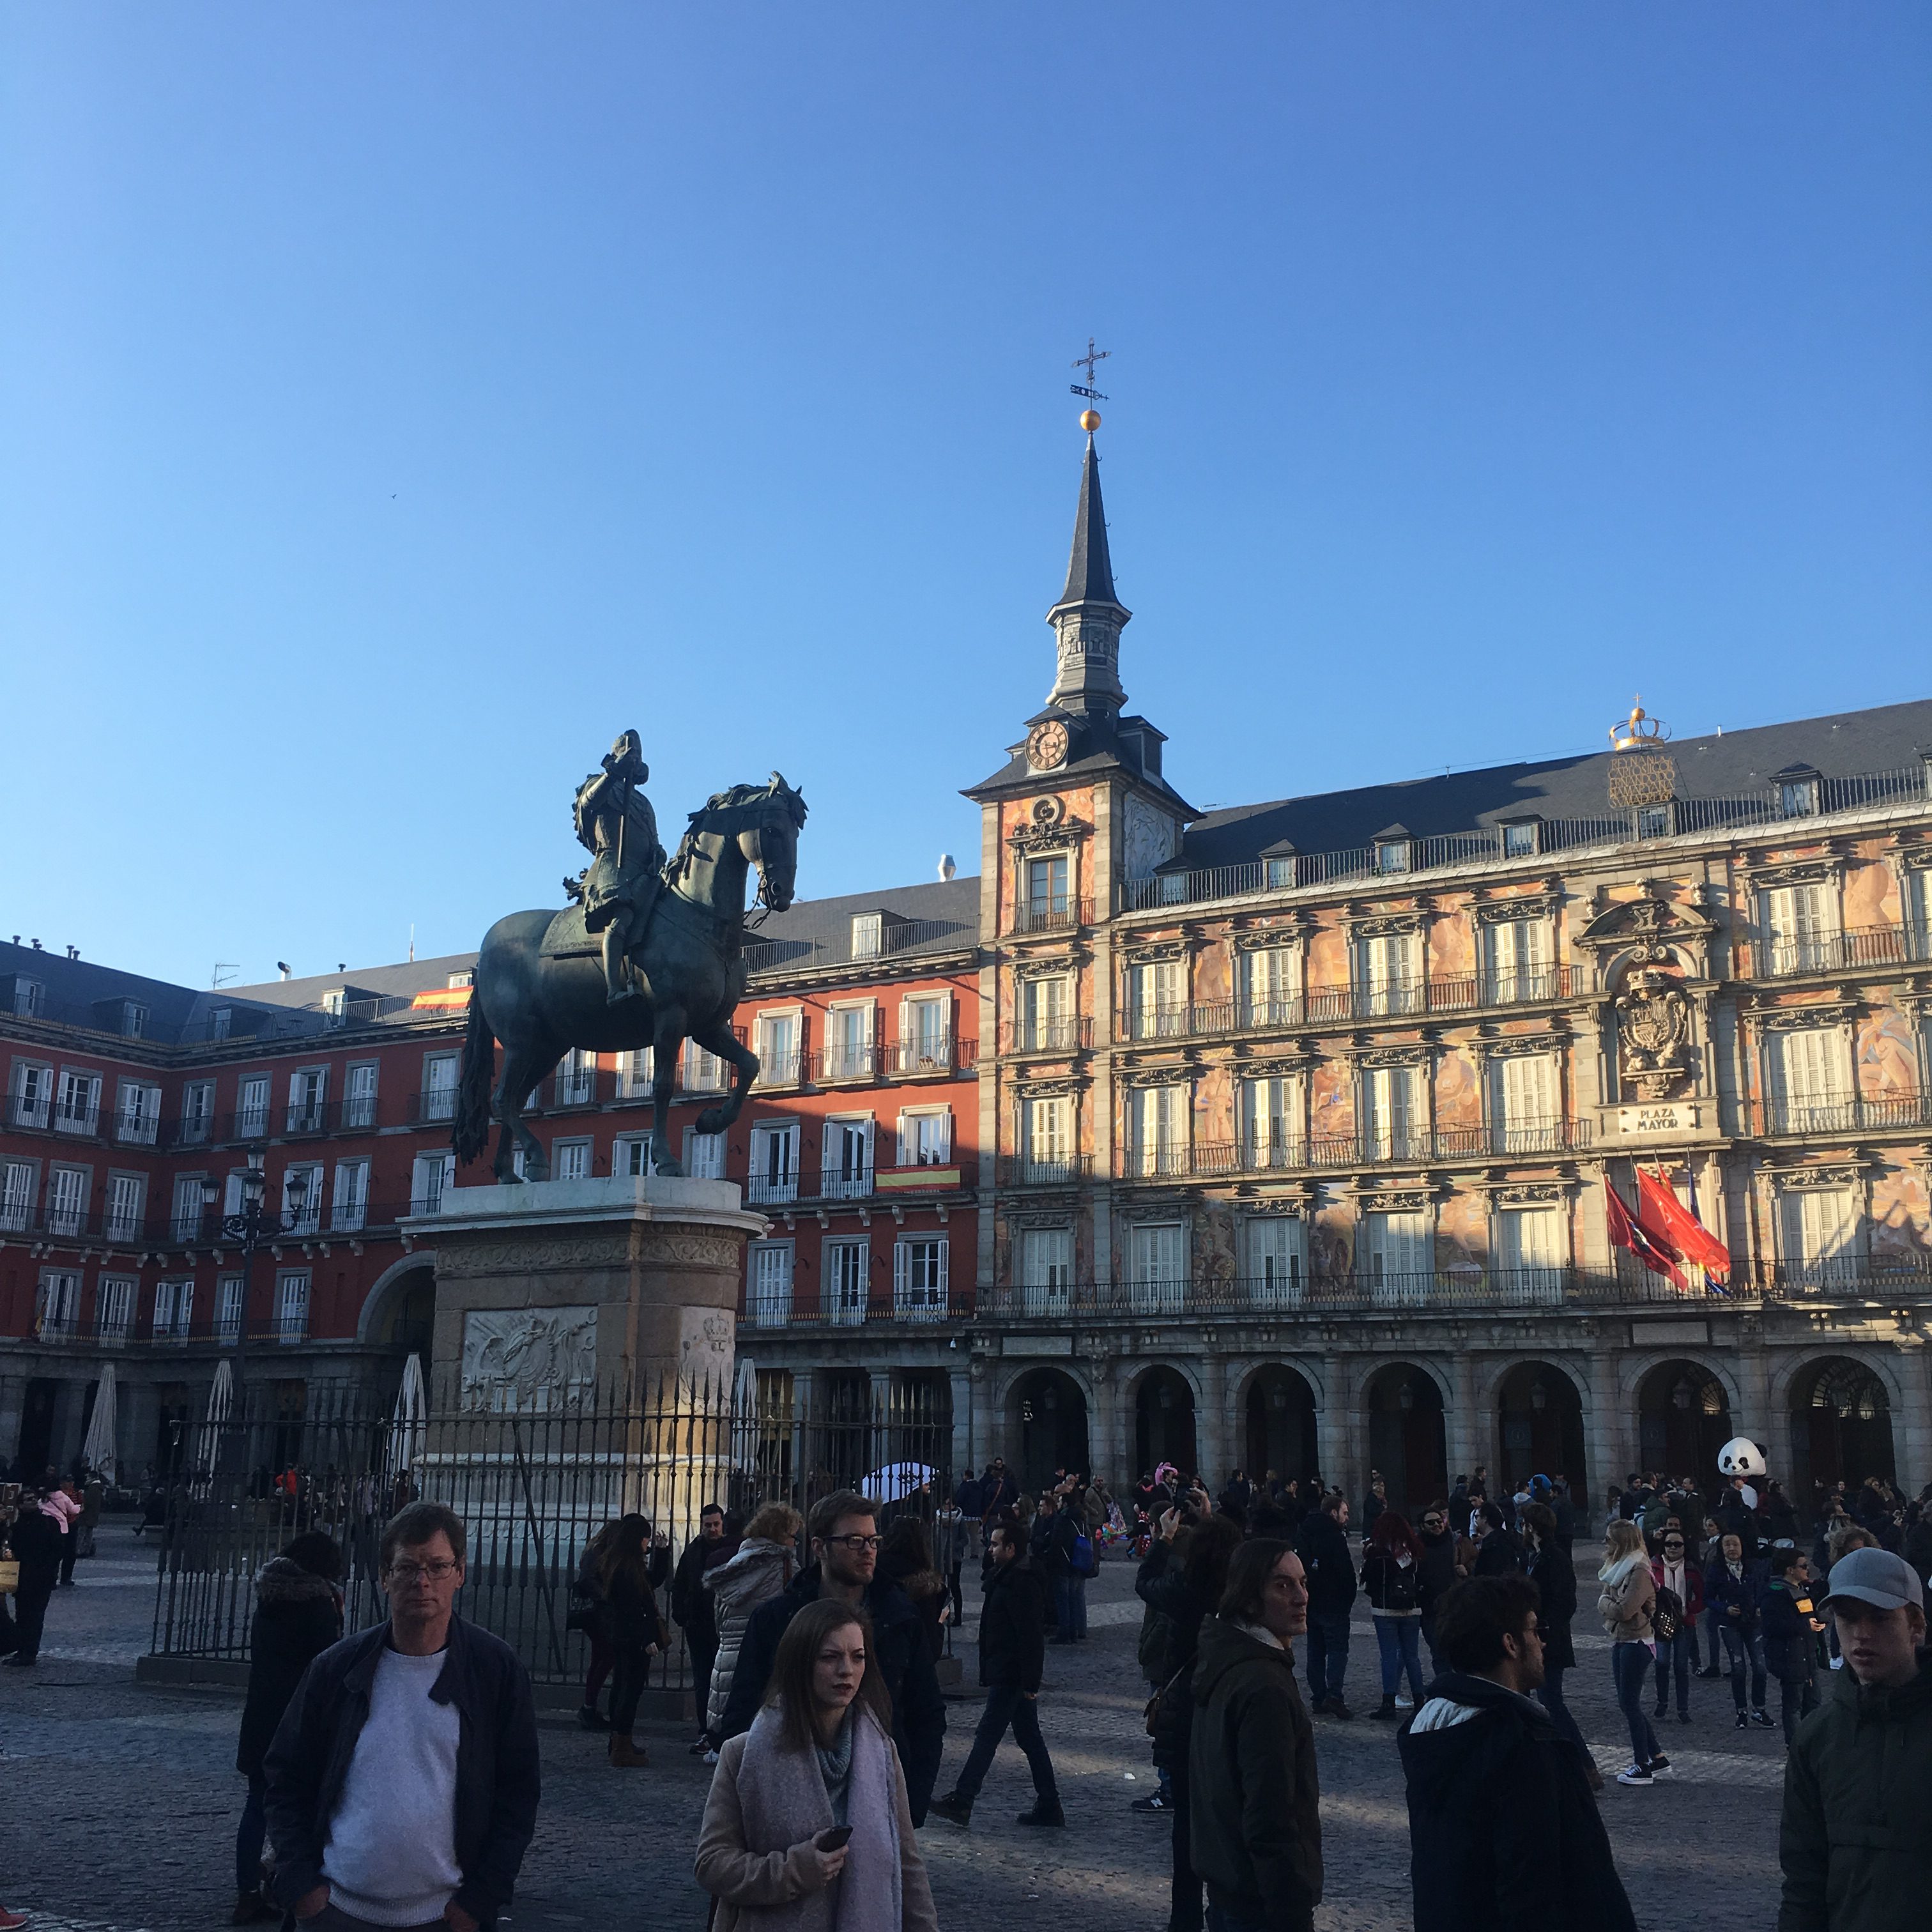 Madrid: Nostalgia in the City